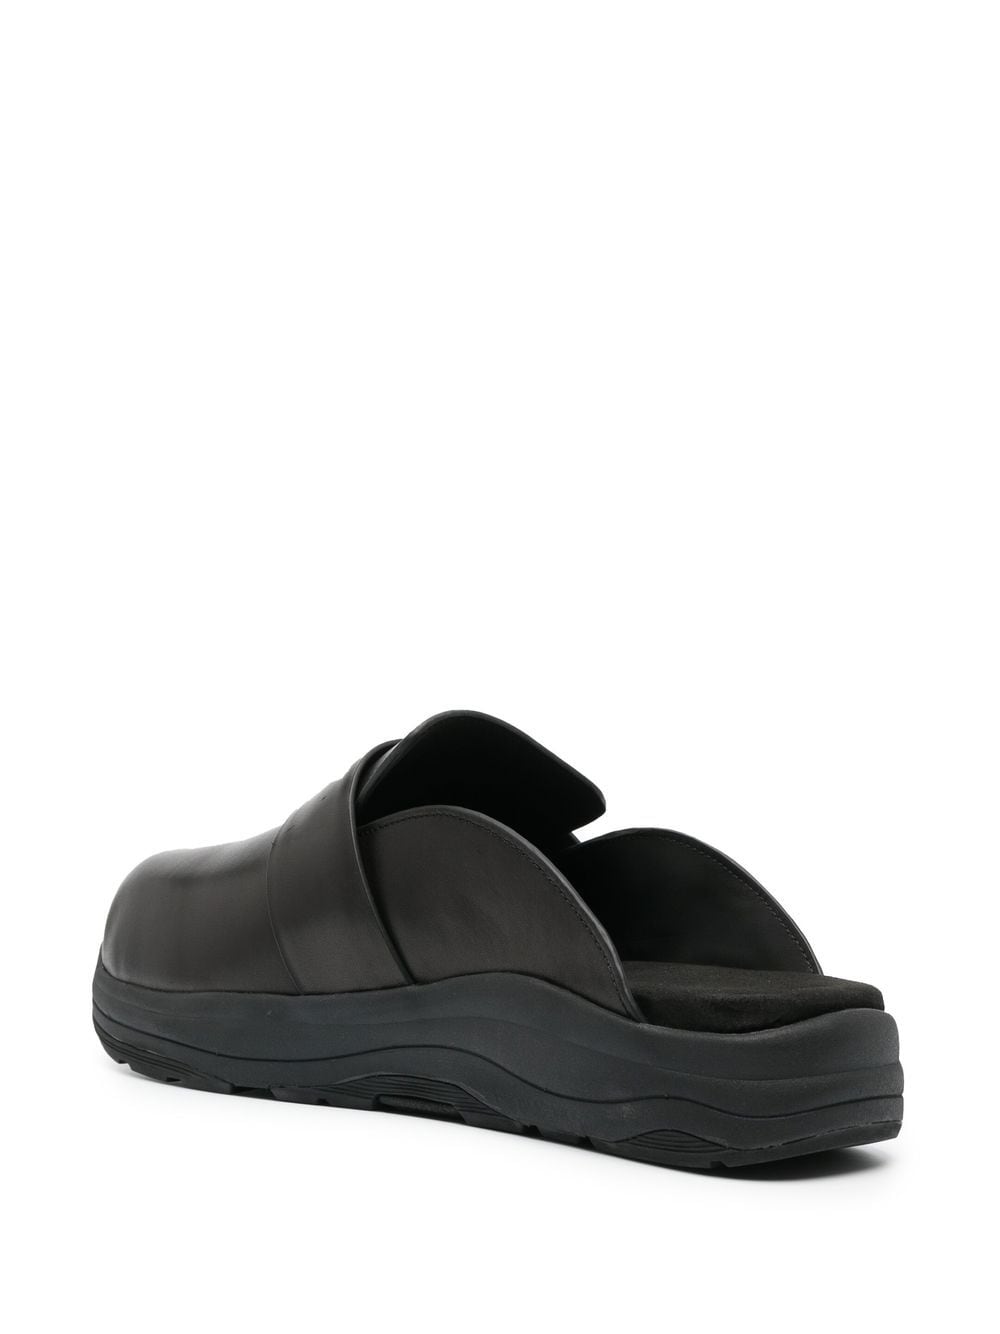 tom wood x suicoke leather sandals - black